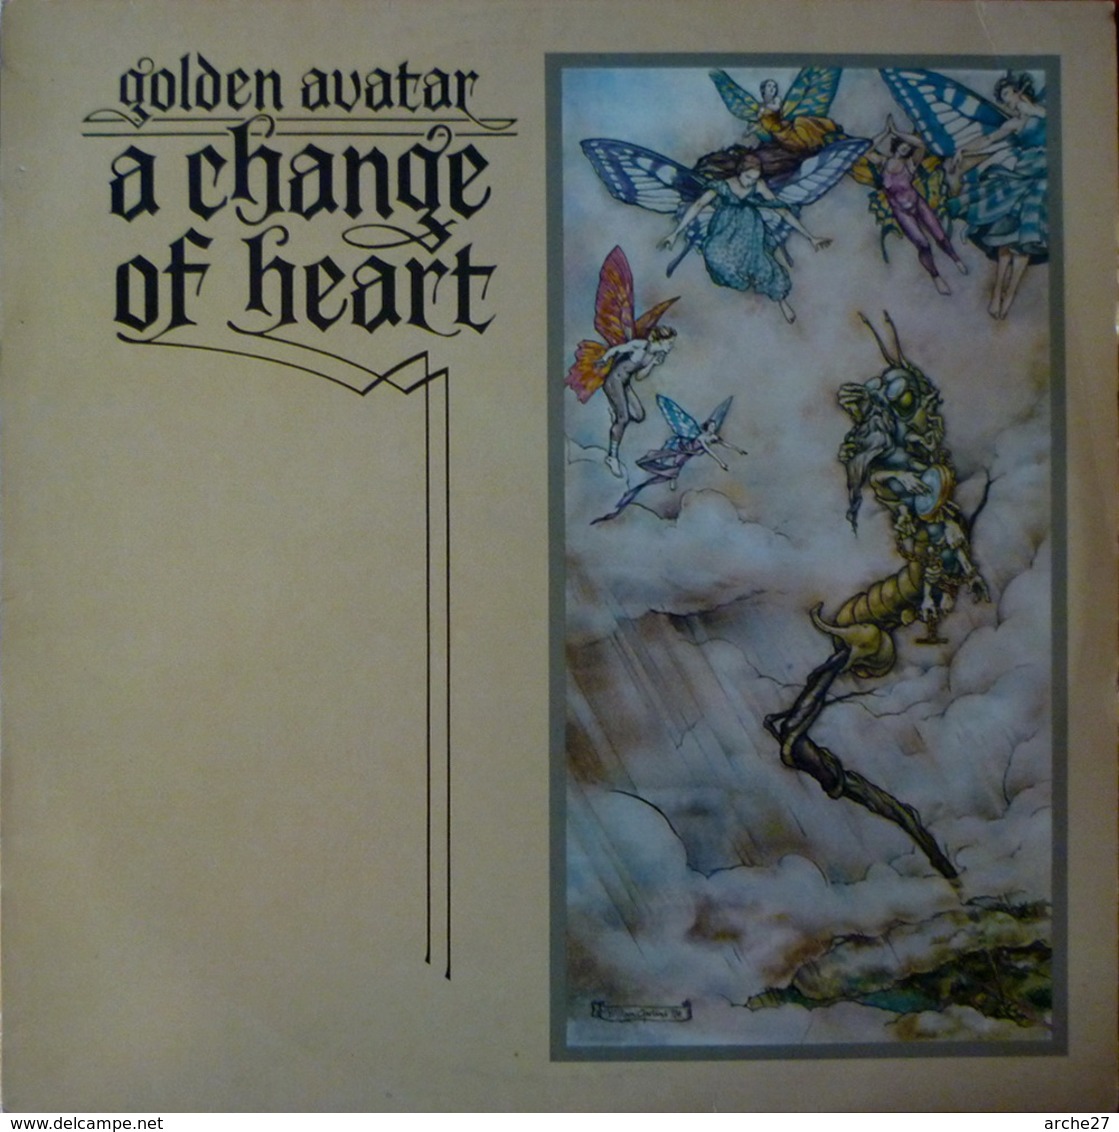 GOLDEN AVATAR - LP - 33T - Disque Vinyle - A Change Of Heart - 108B - Rock